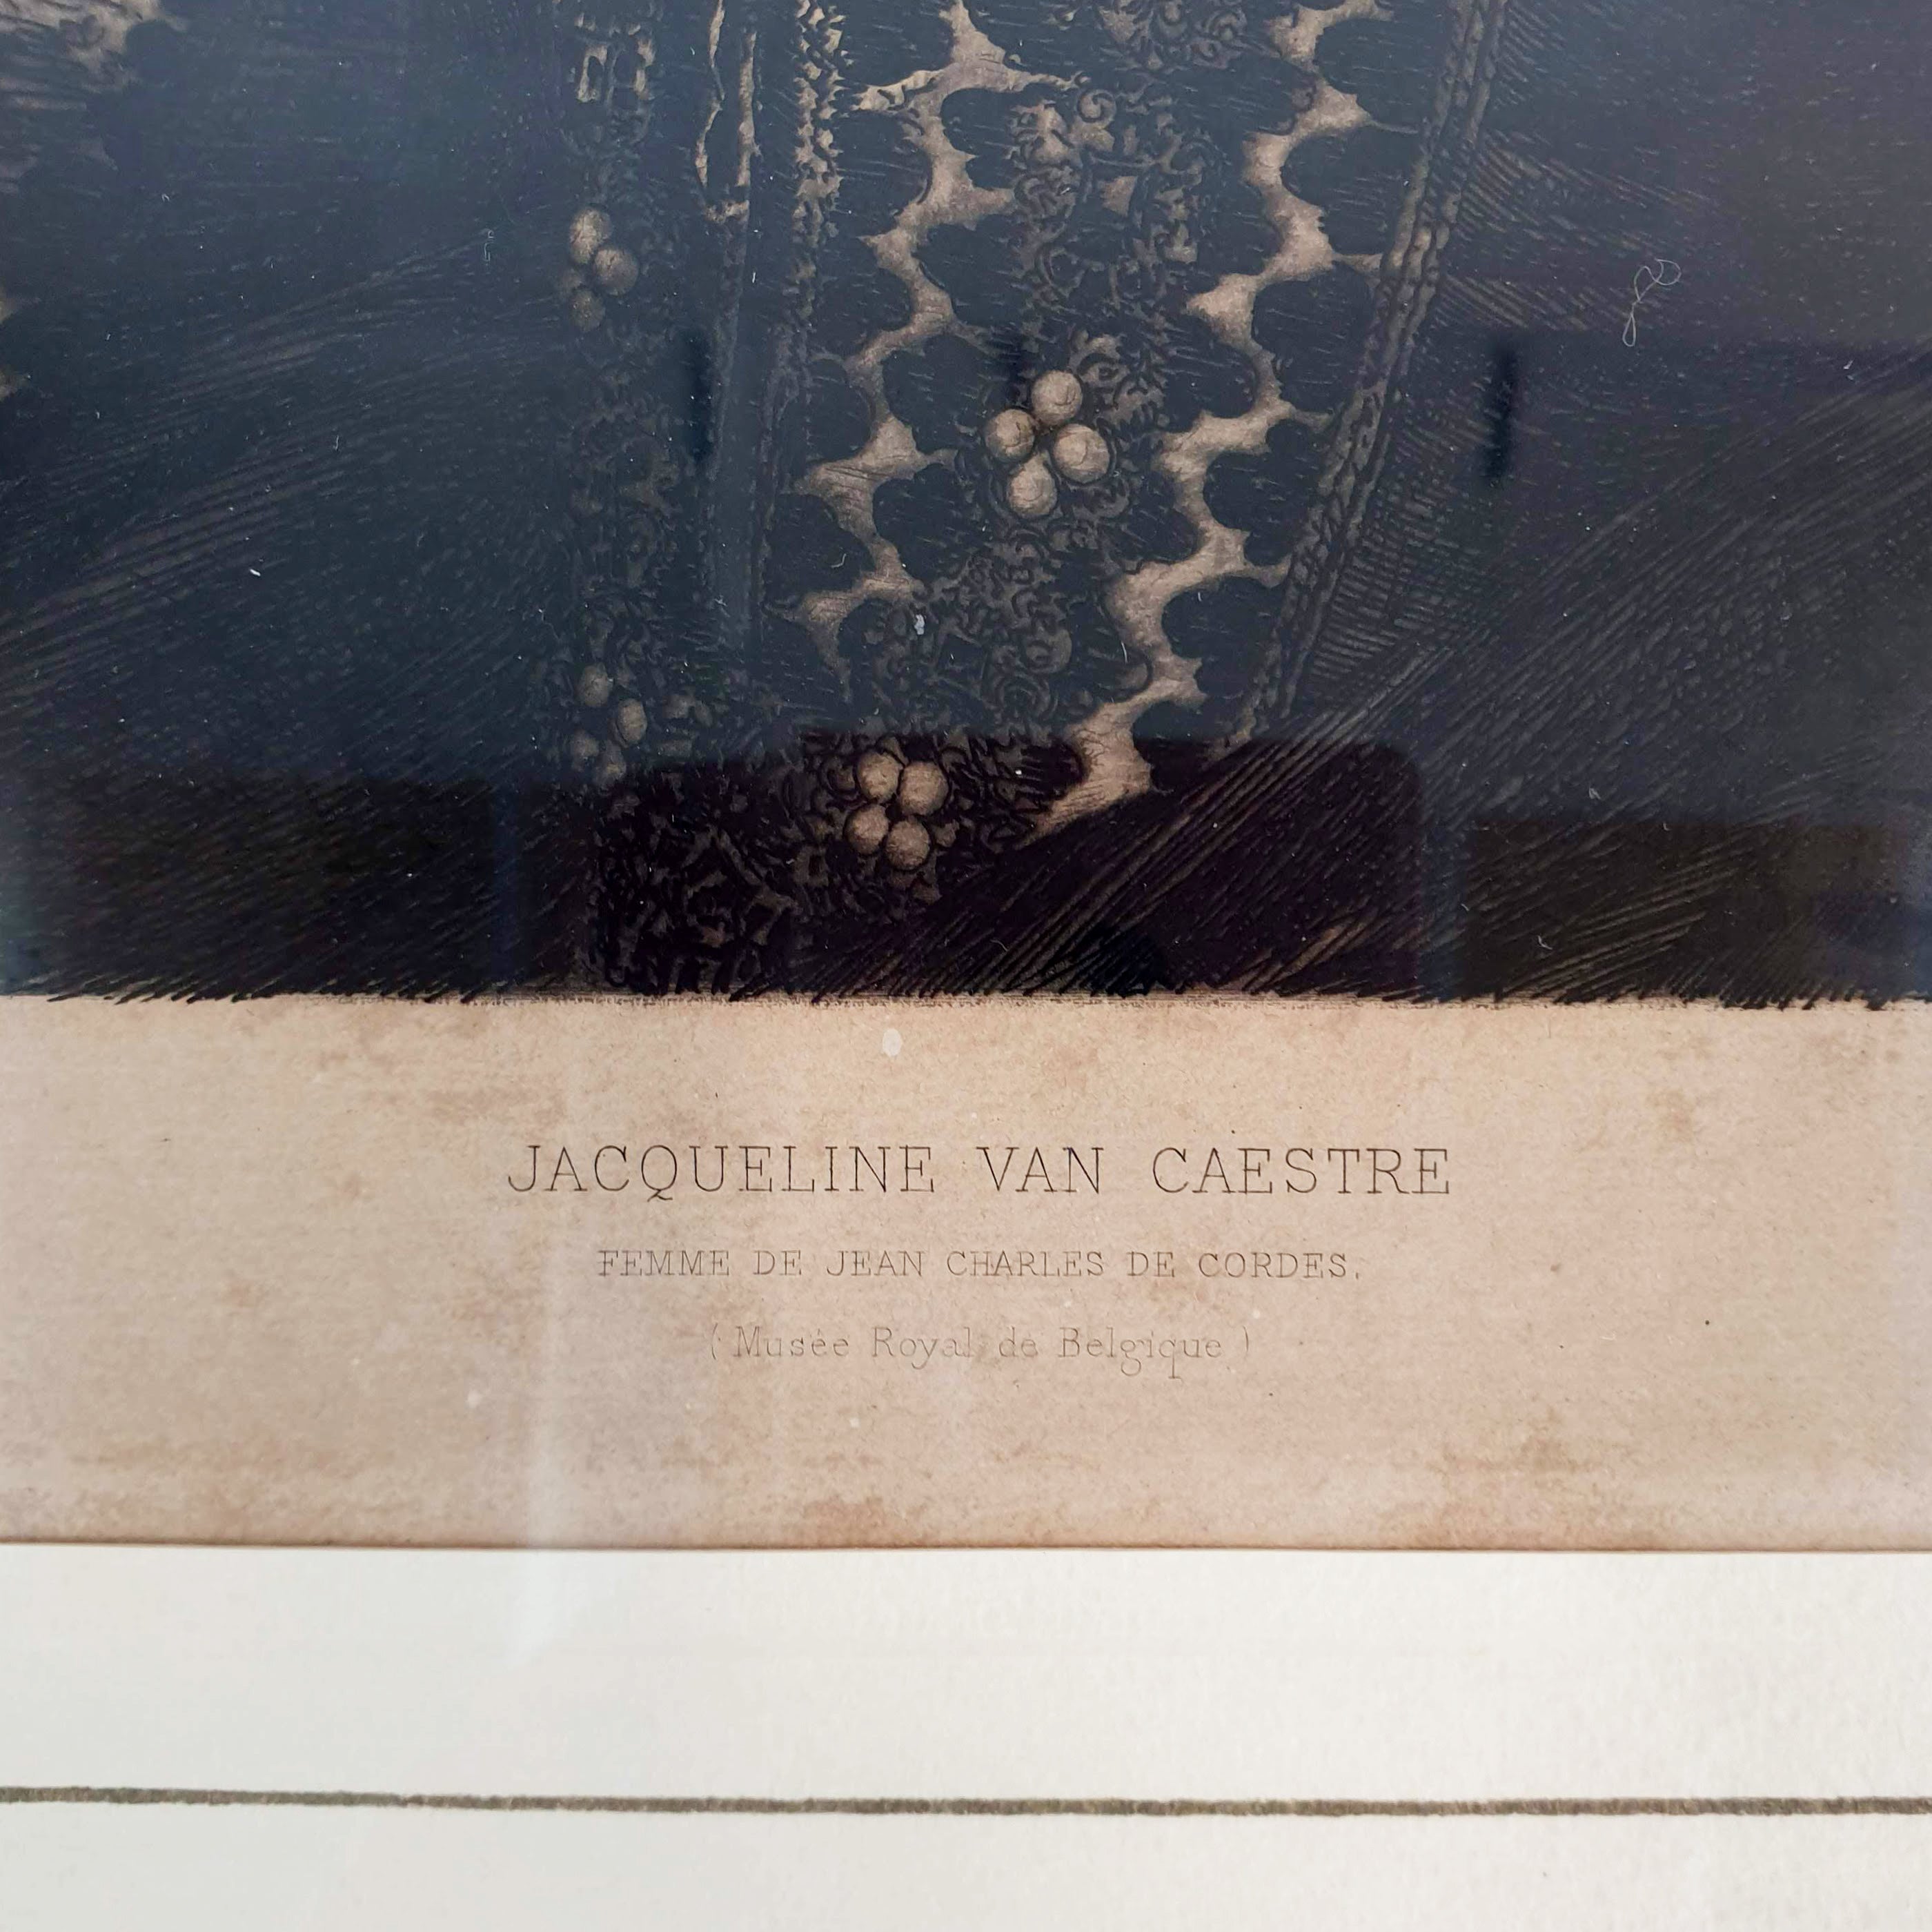 Antique print of Jacqueline Van Caestre by P.P. Rubens